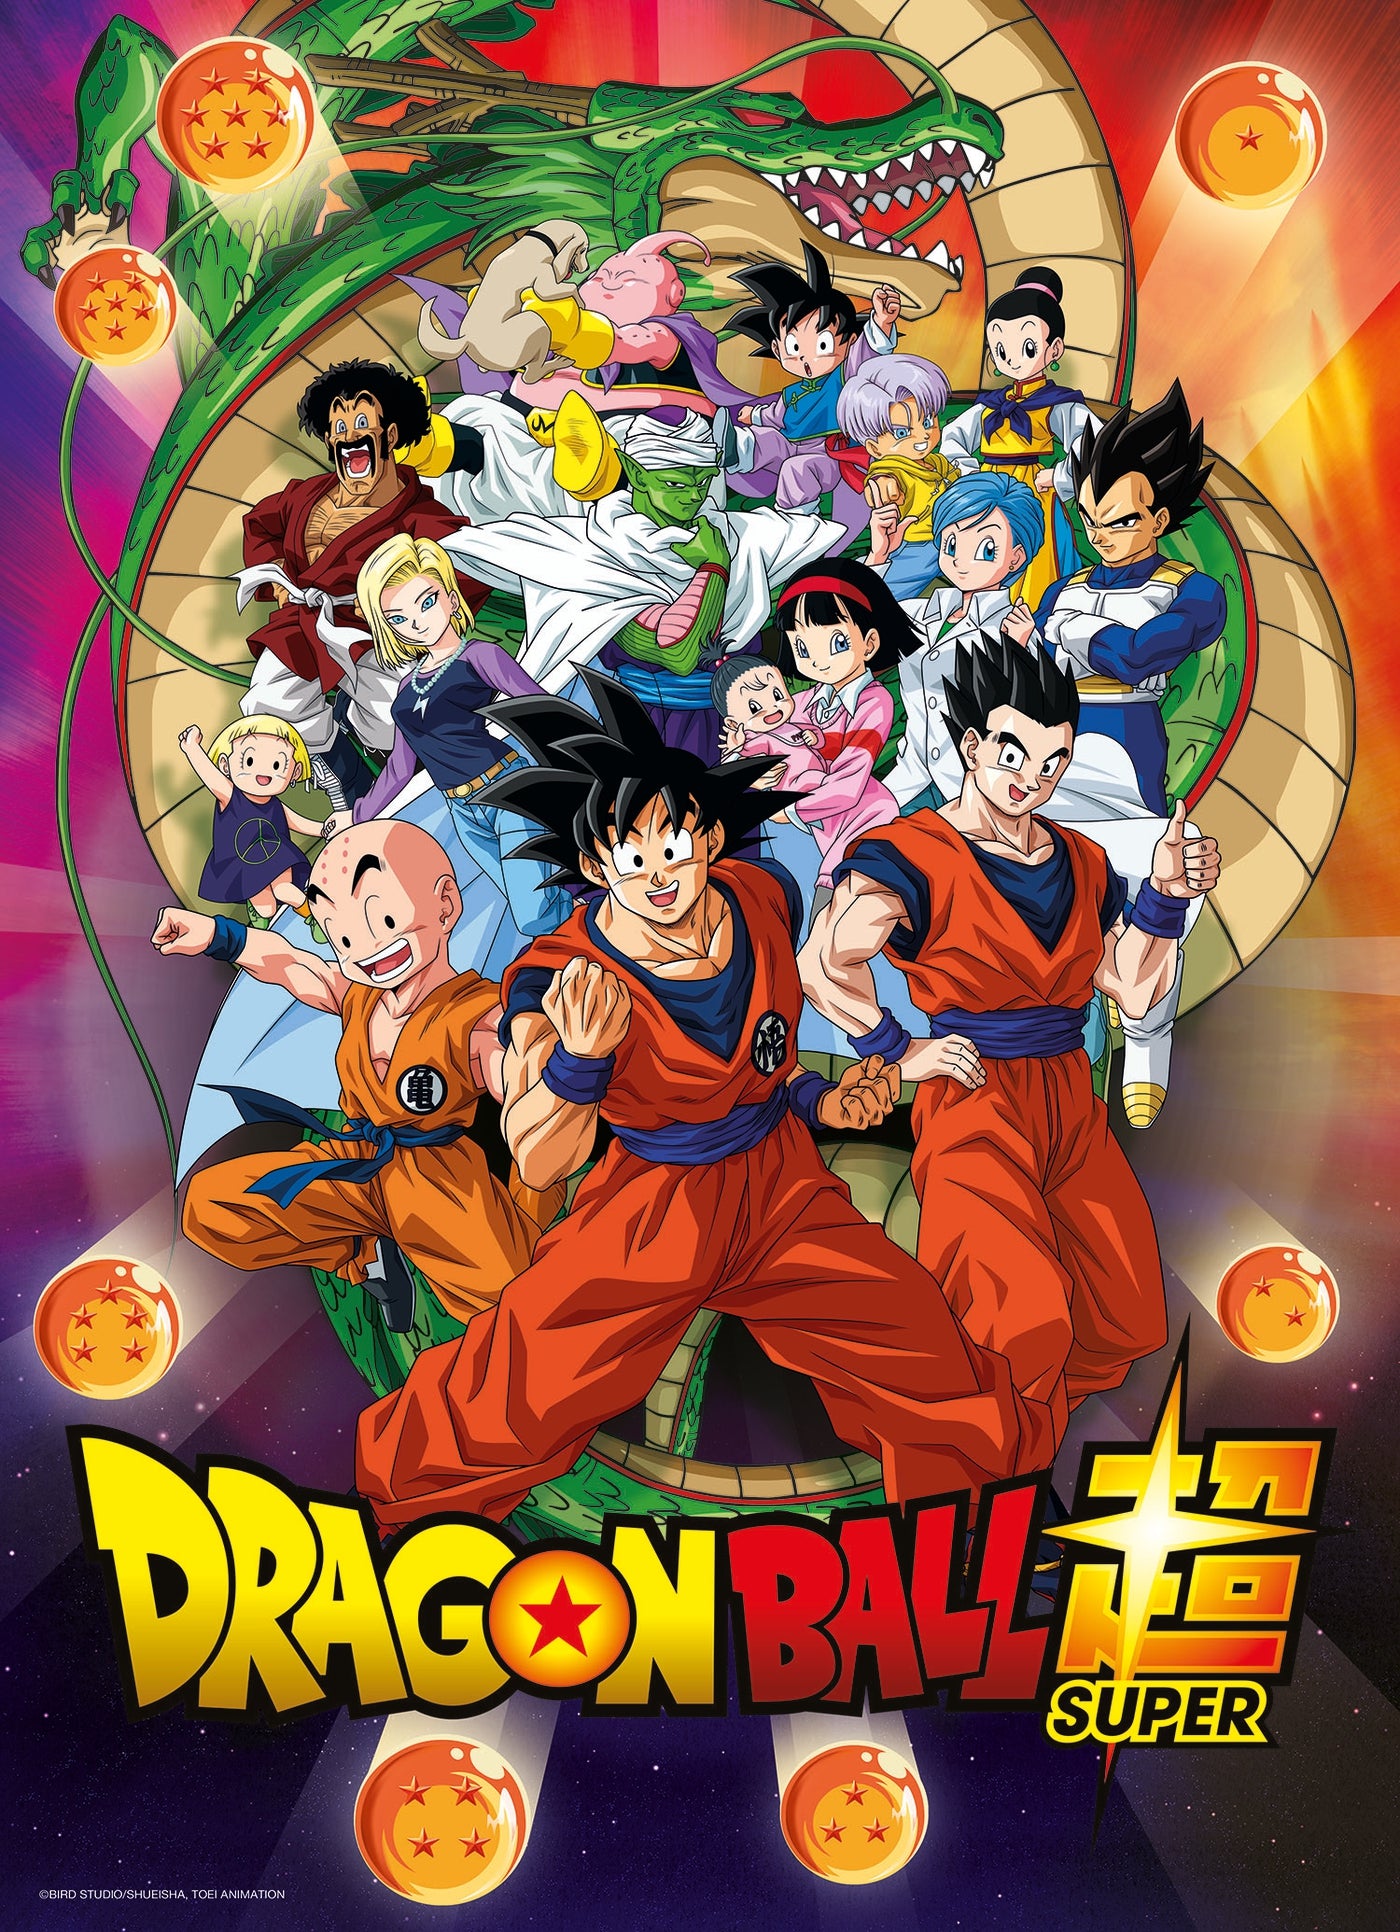 Dragon Ball Z Ichibansho Goku & Frieza (Ball Battle on Planet Namek)